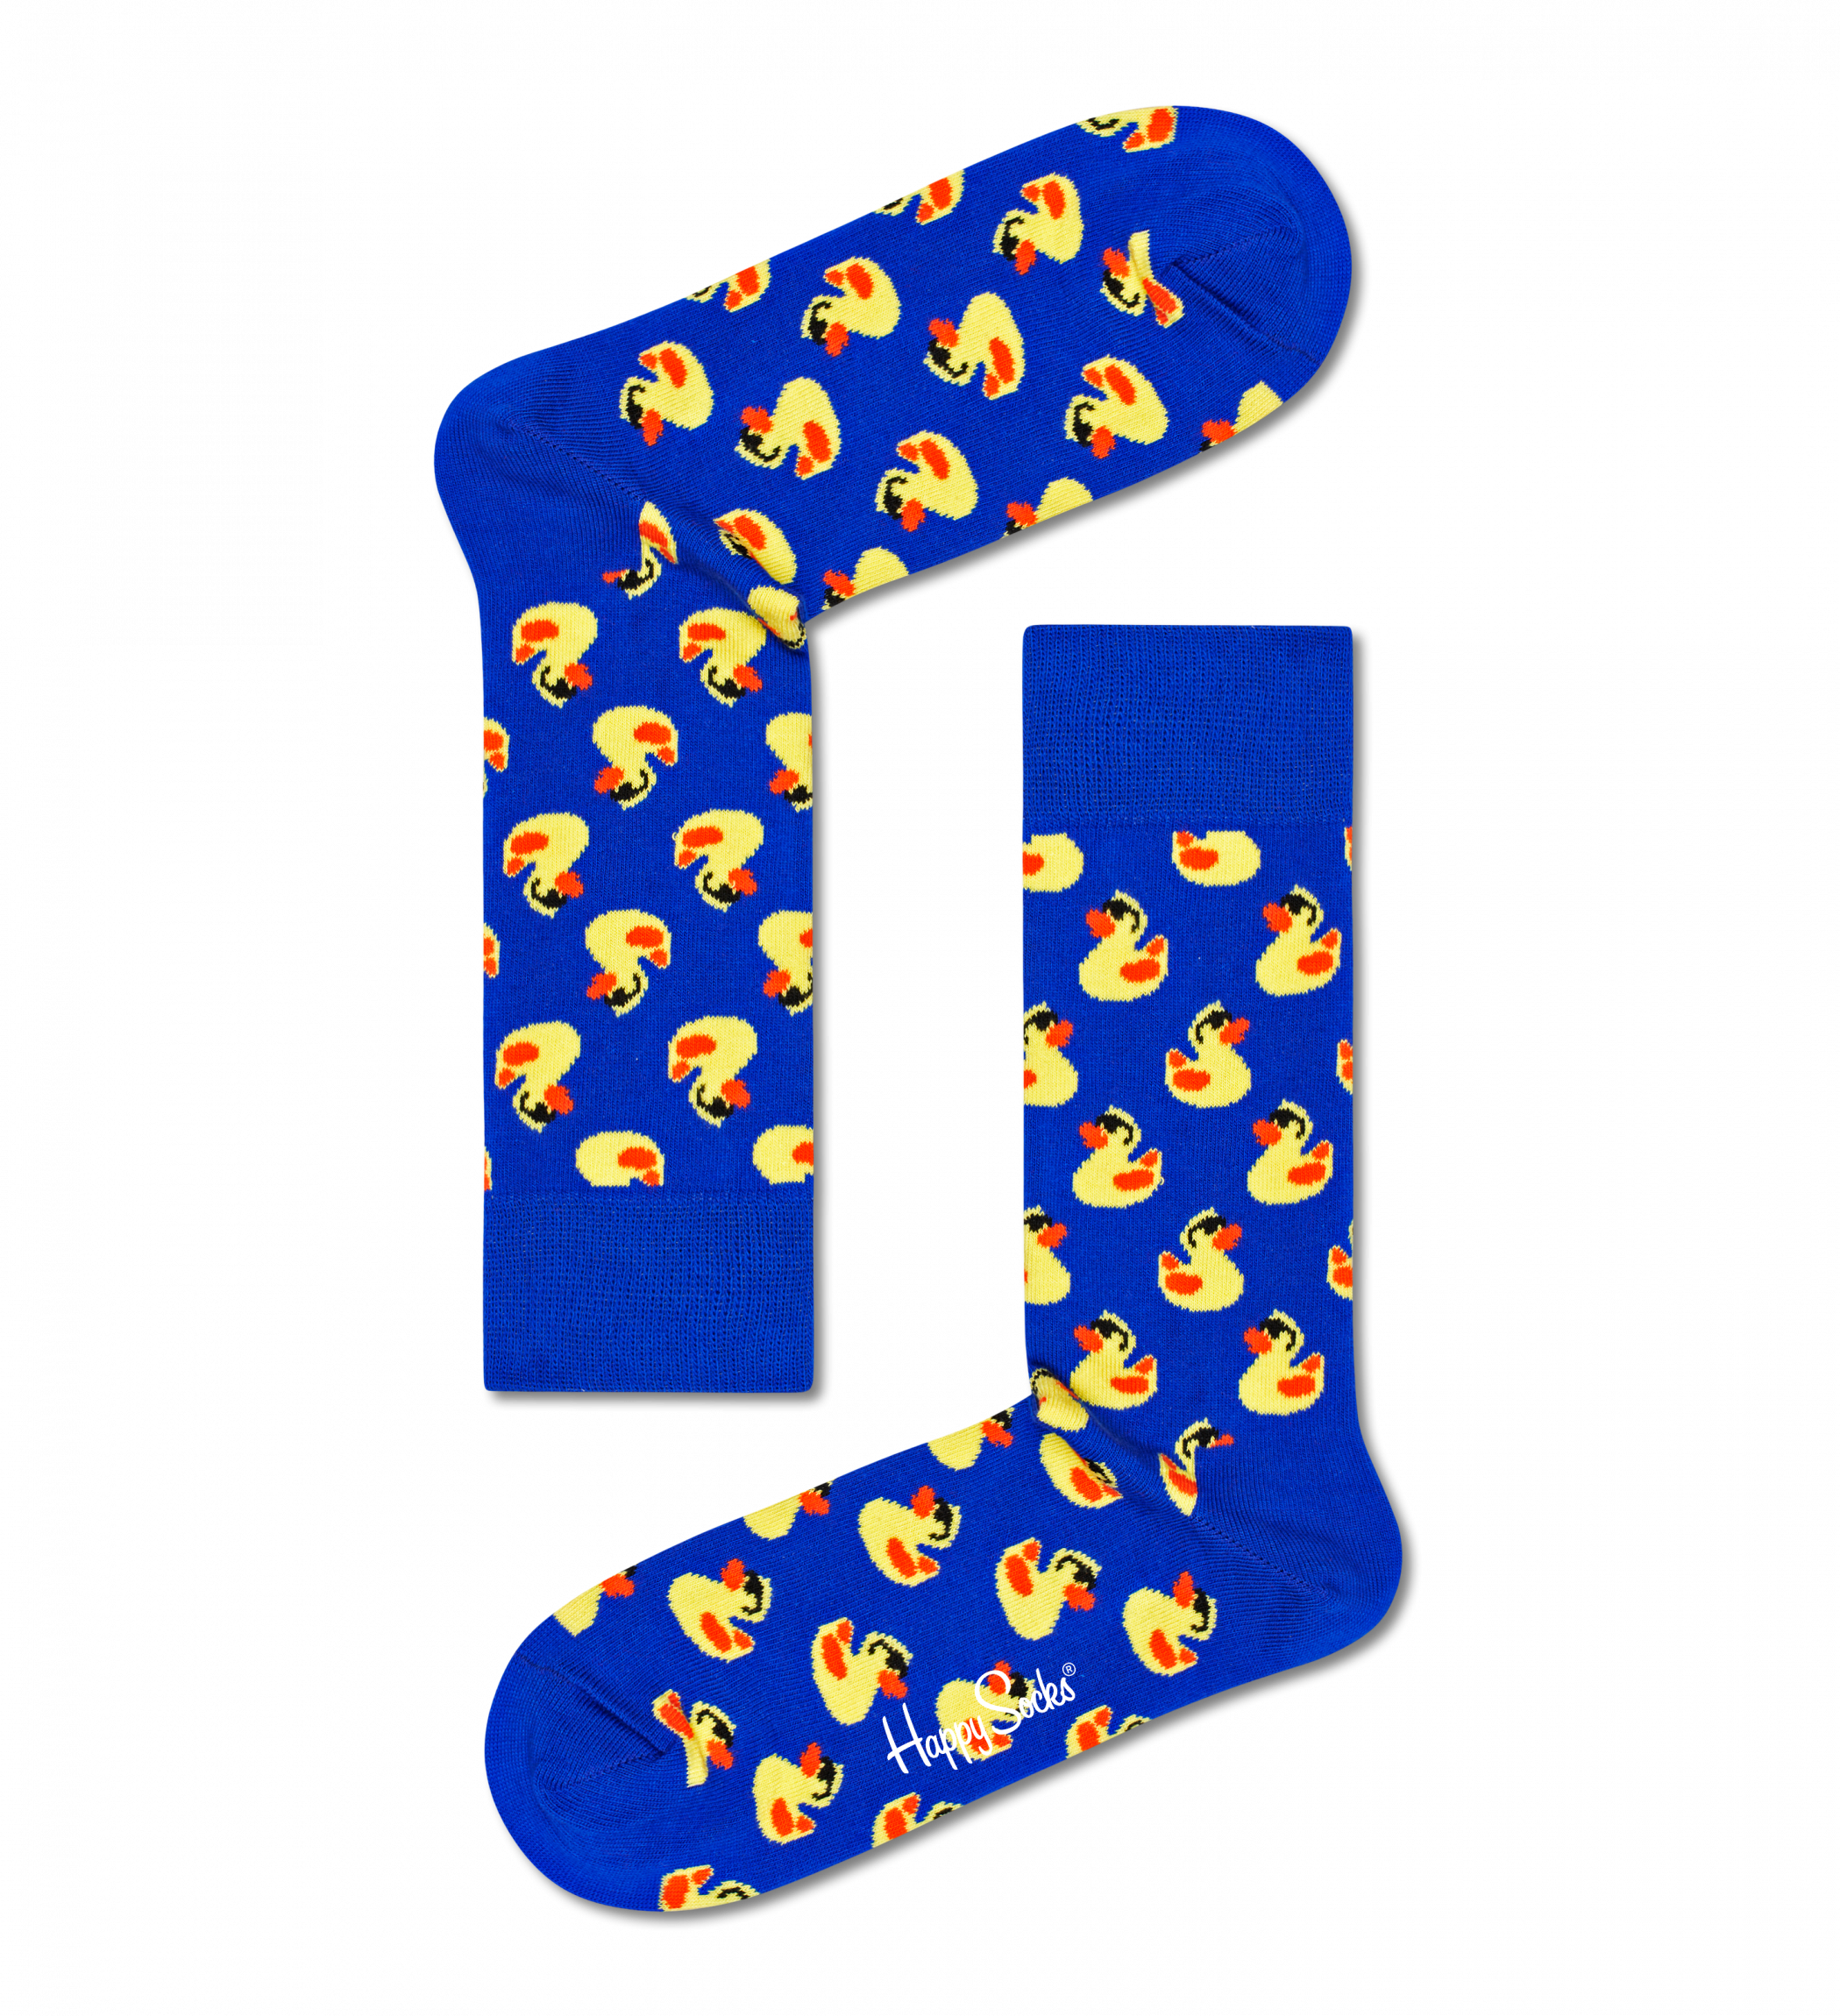 Modré ponožky Happy Socks s kačičkami, vzor Rubber Duck